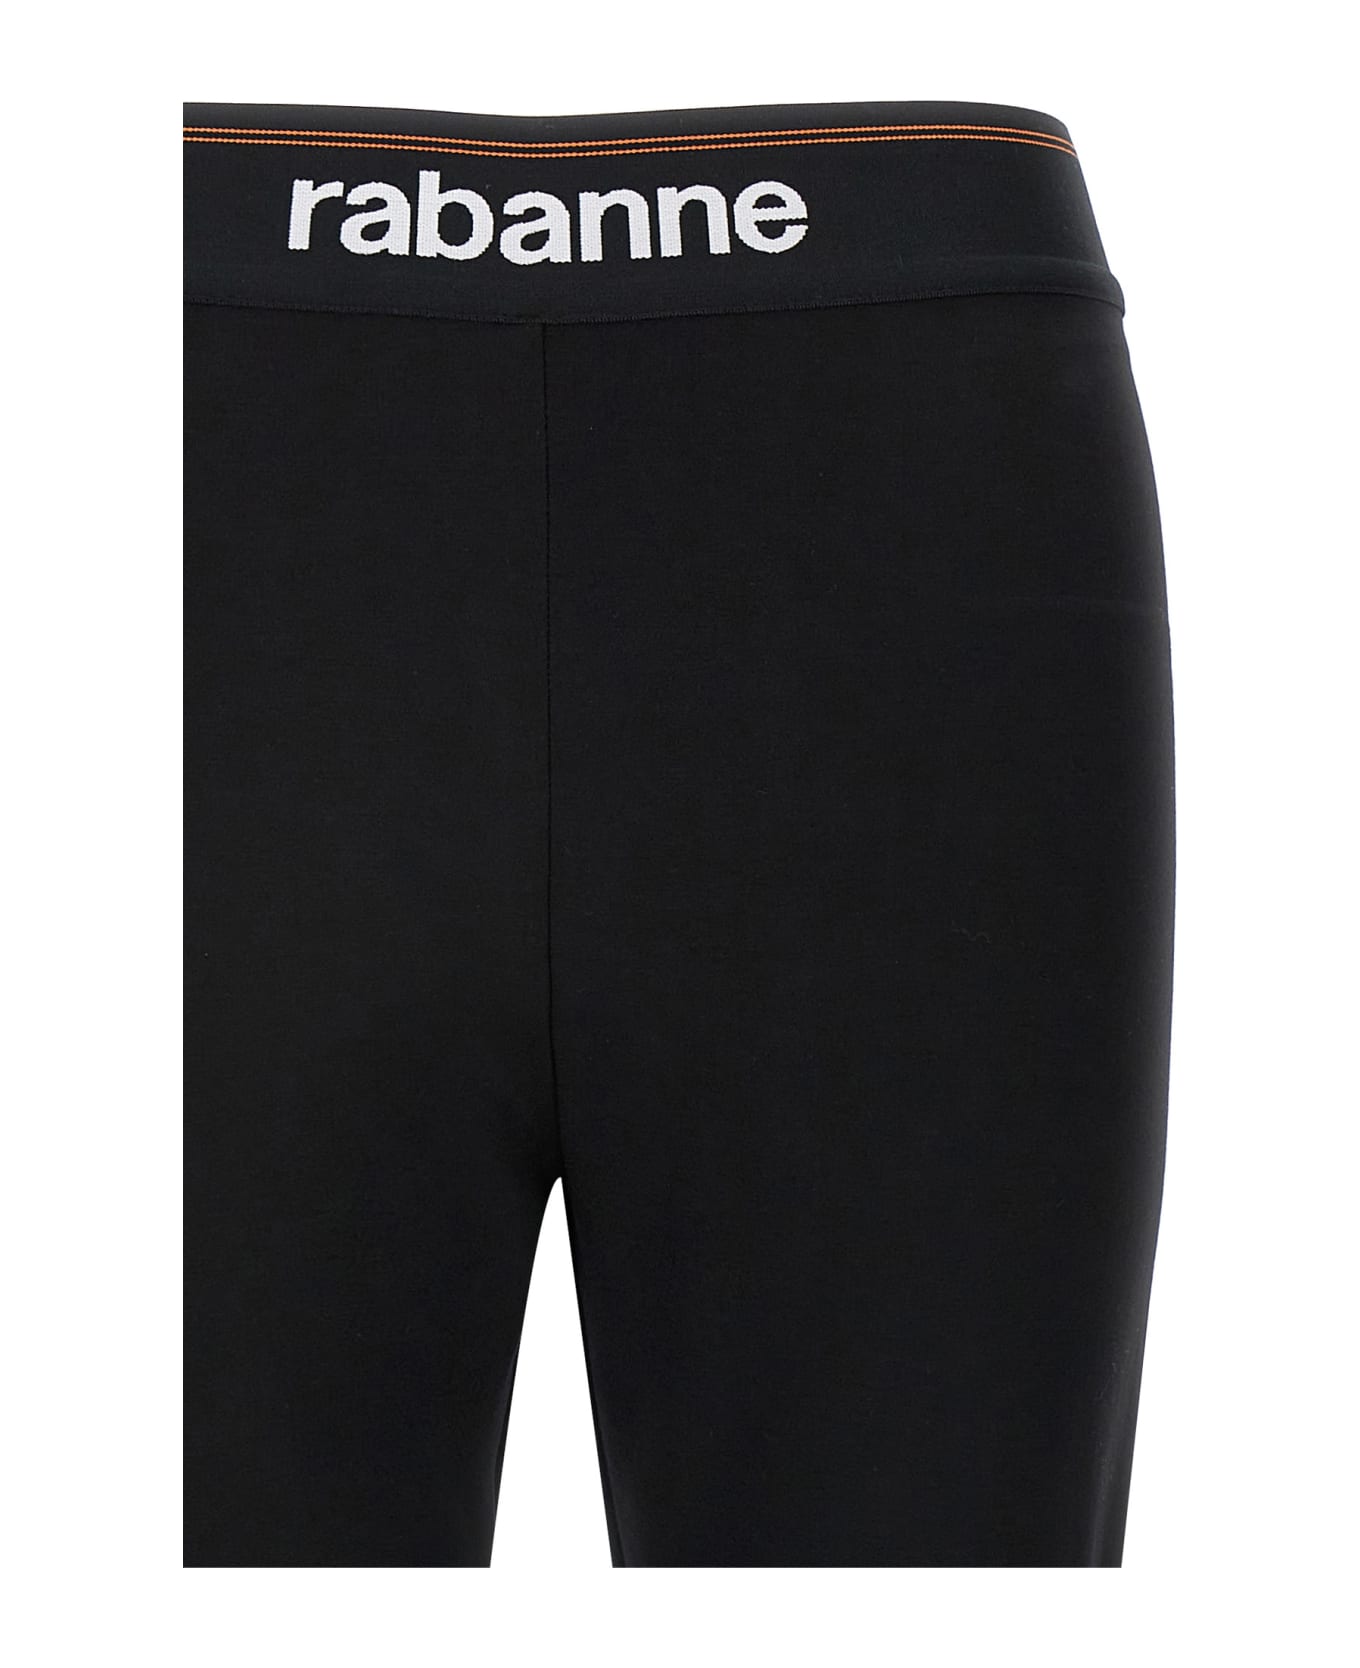 Paco Rabanne Logo Leggings - Black レギンス